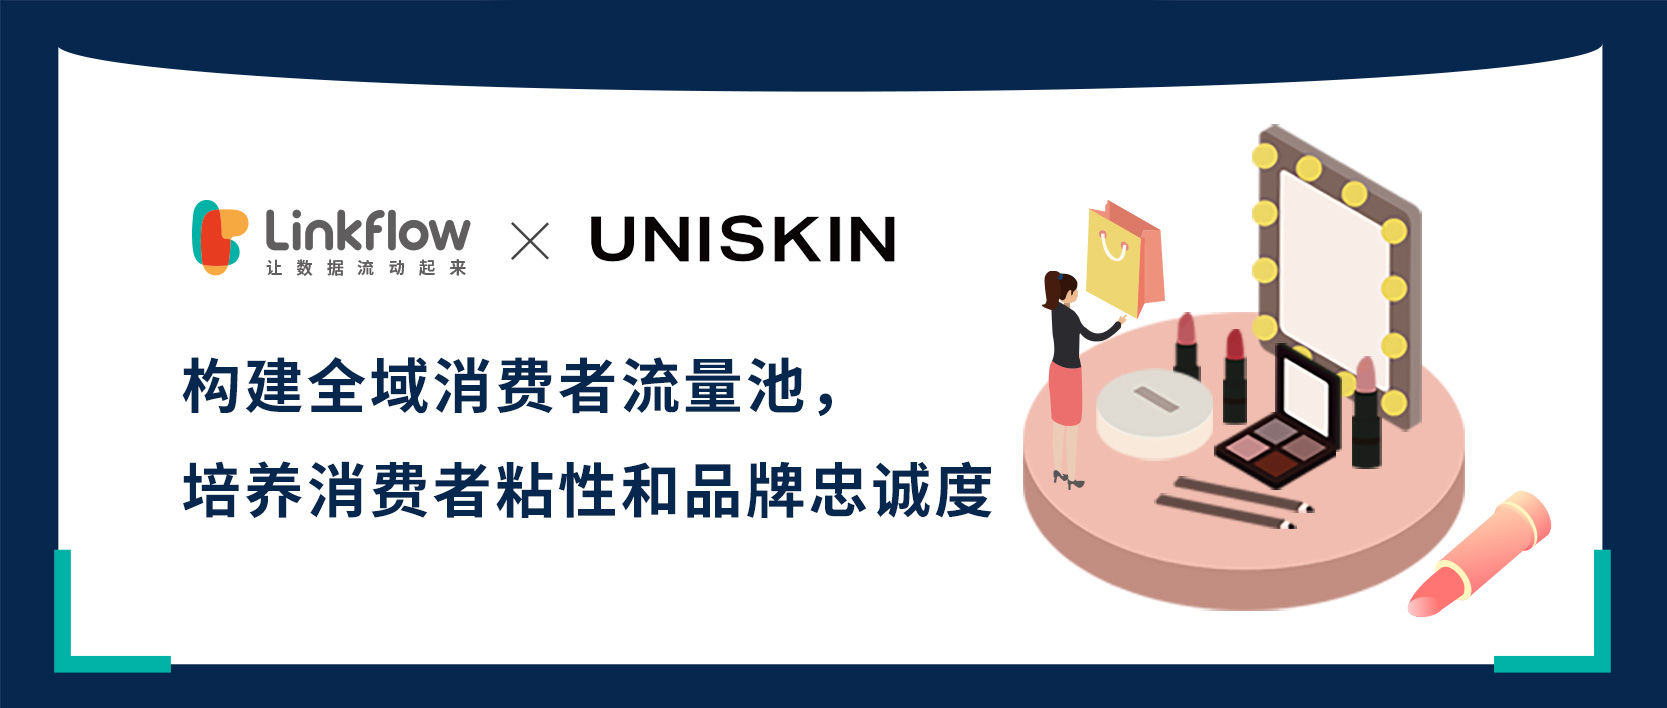 Linkflow × UNISKIN：助力DTC品牌构建全域消费者流量池，培养消费者粘性和品牌忠诚度